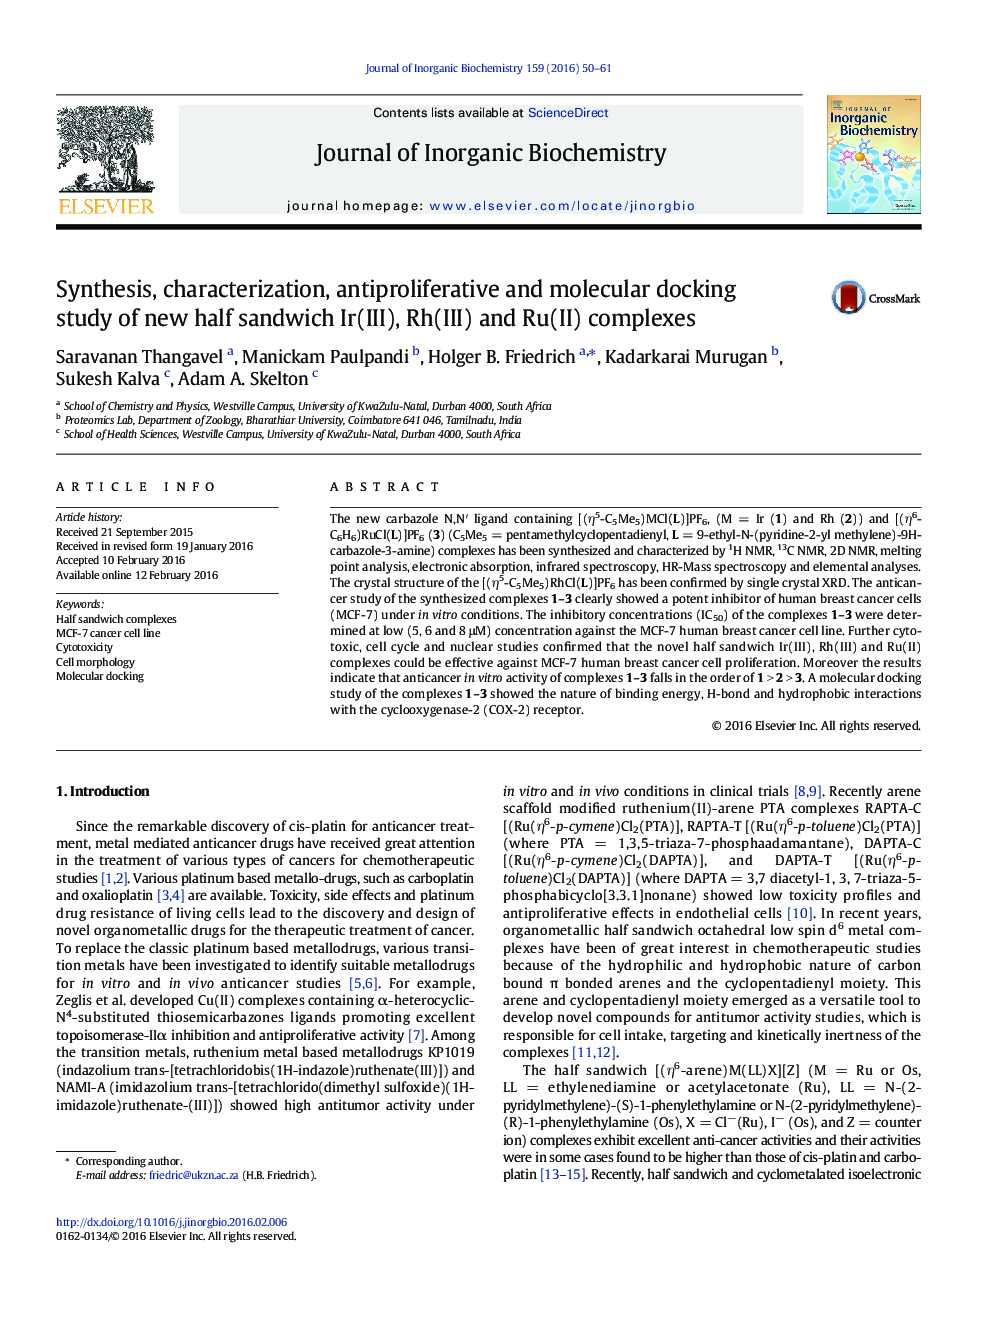 Synthesis, characterization, antiproliferative and molecular docking study of new half sandwich Ir(III), Rh(III) and Ru(II) complexes